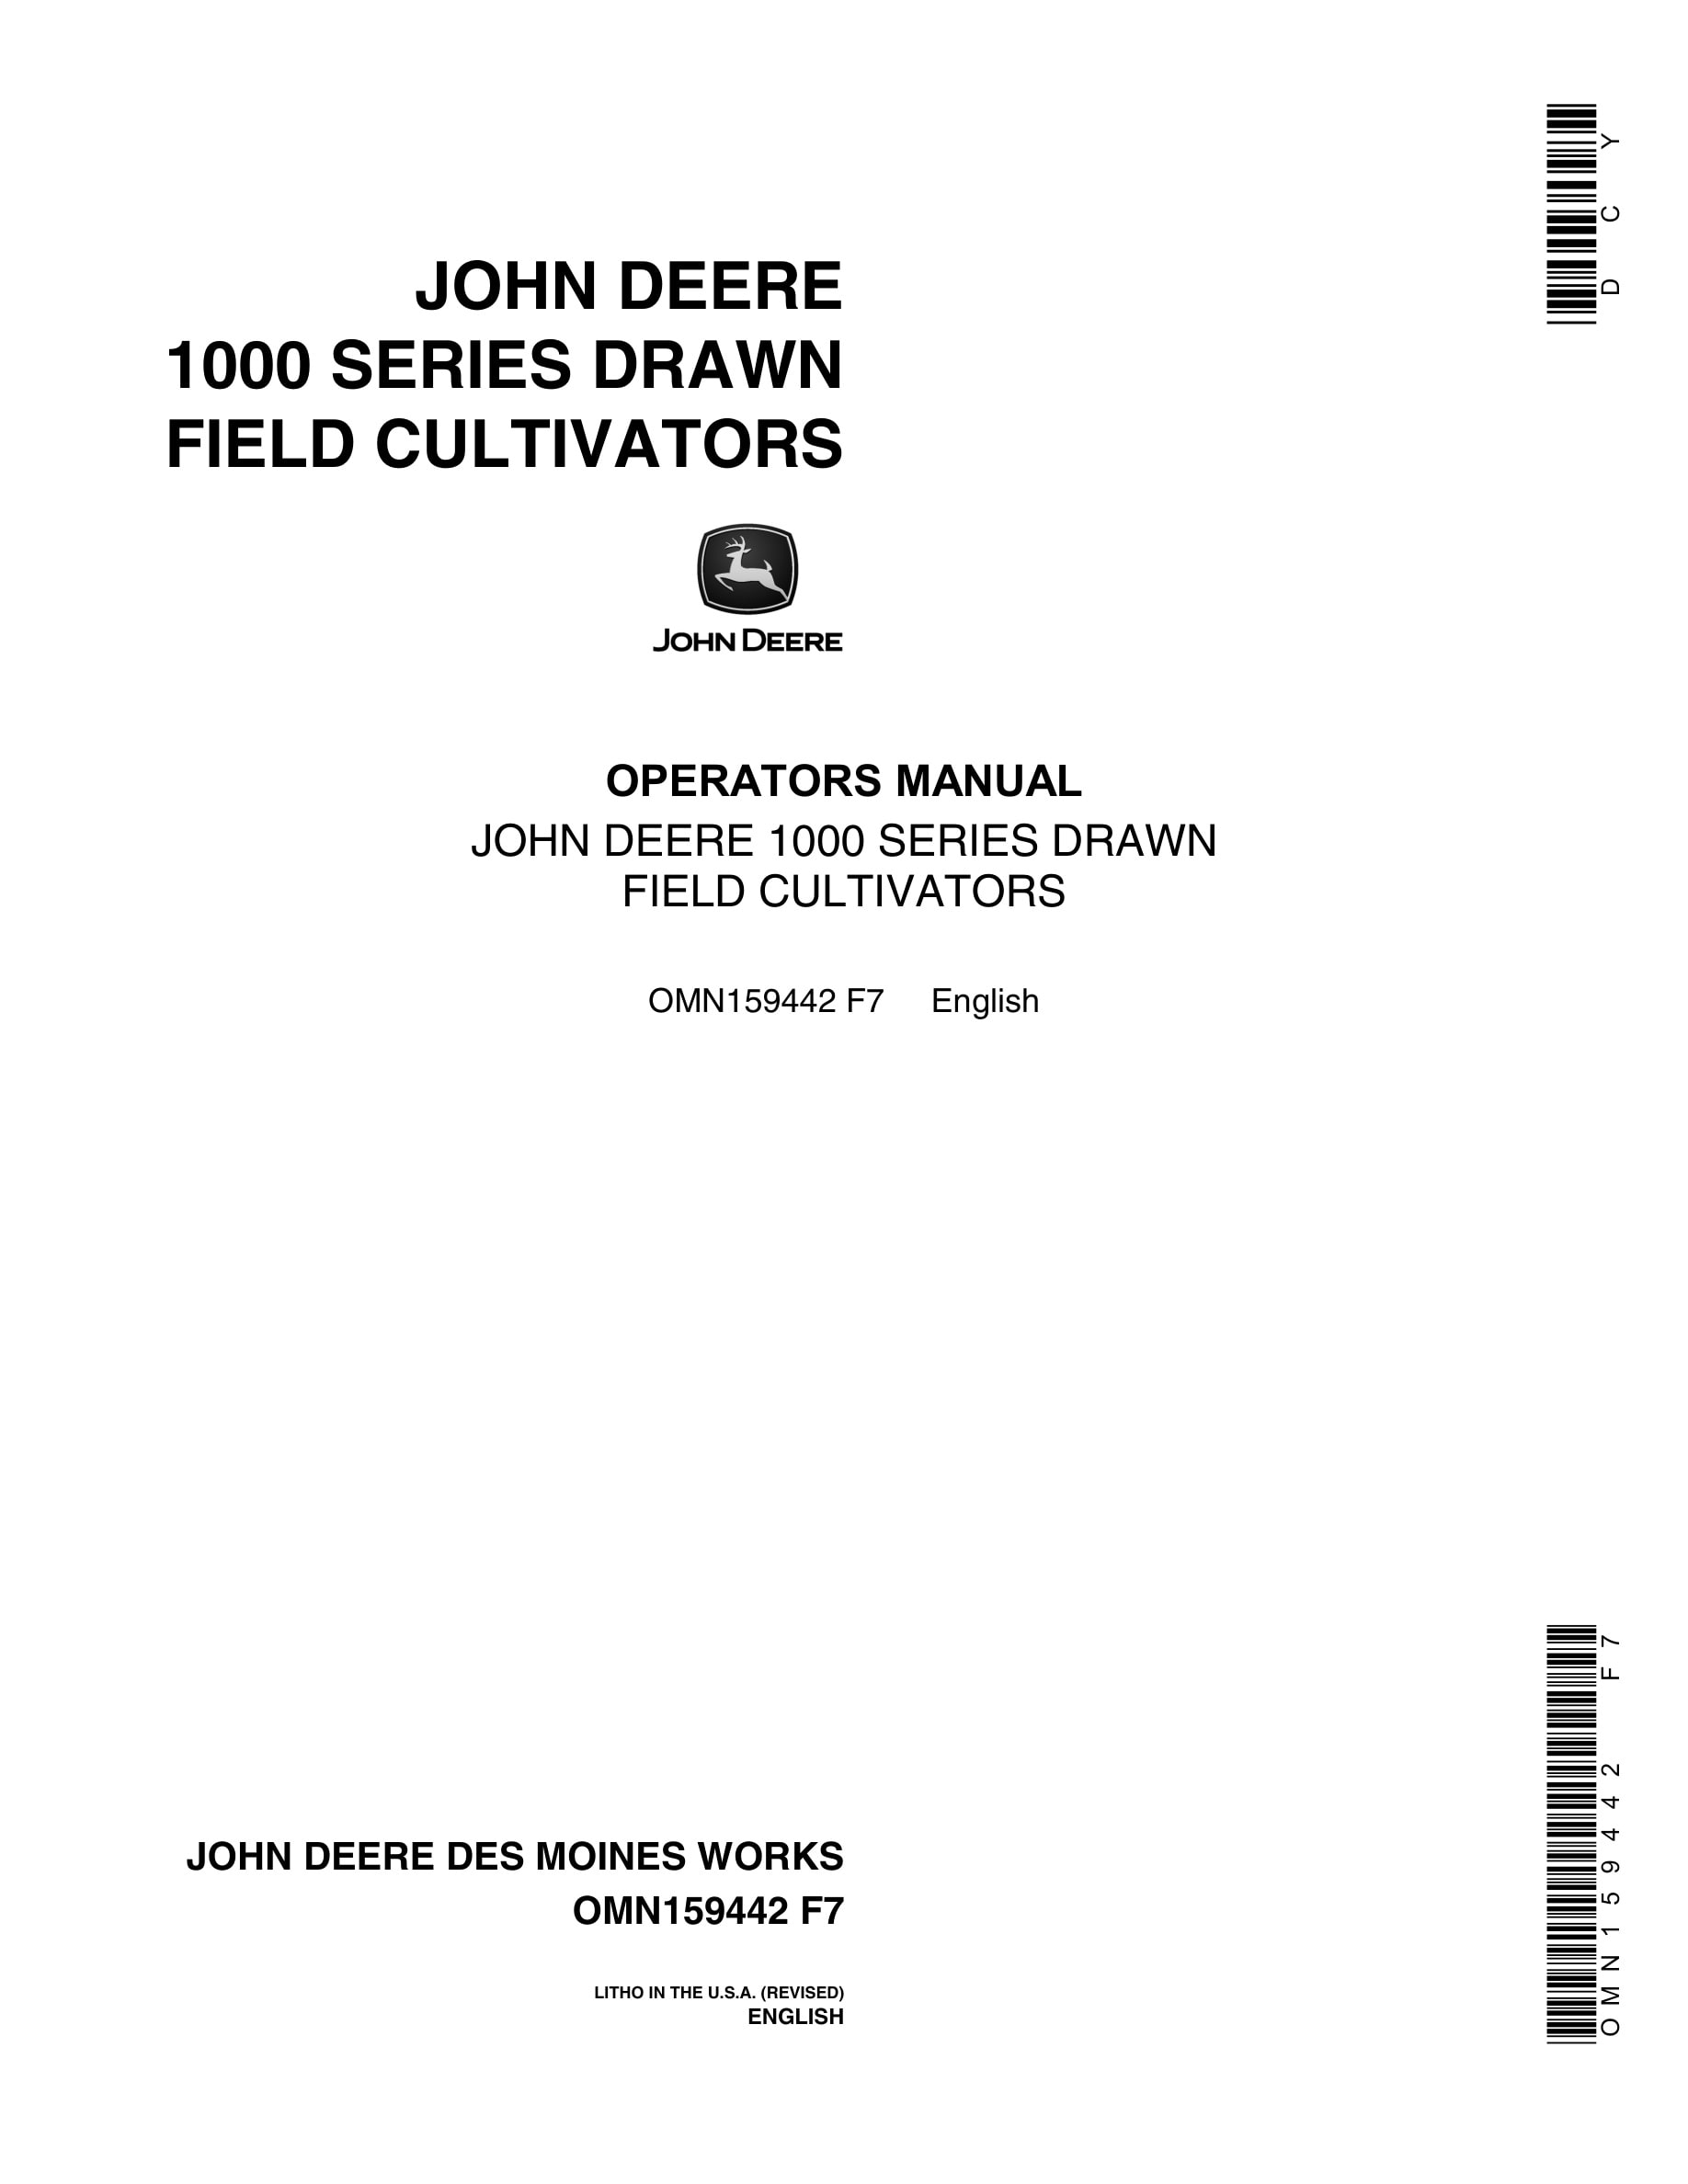 John Deere 1000 SERIES DRAWN FIELD CULTIVATOR Operator Manual OMN159442-1